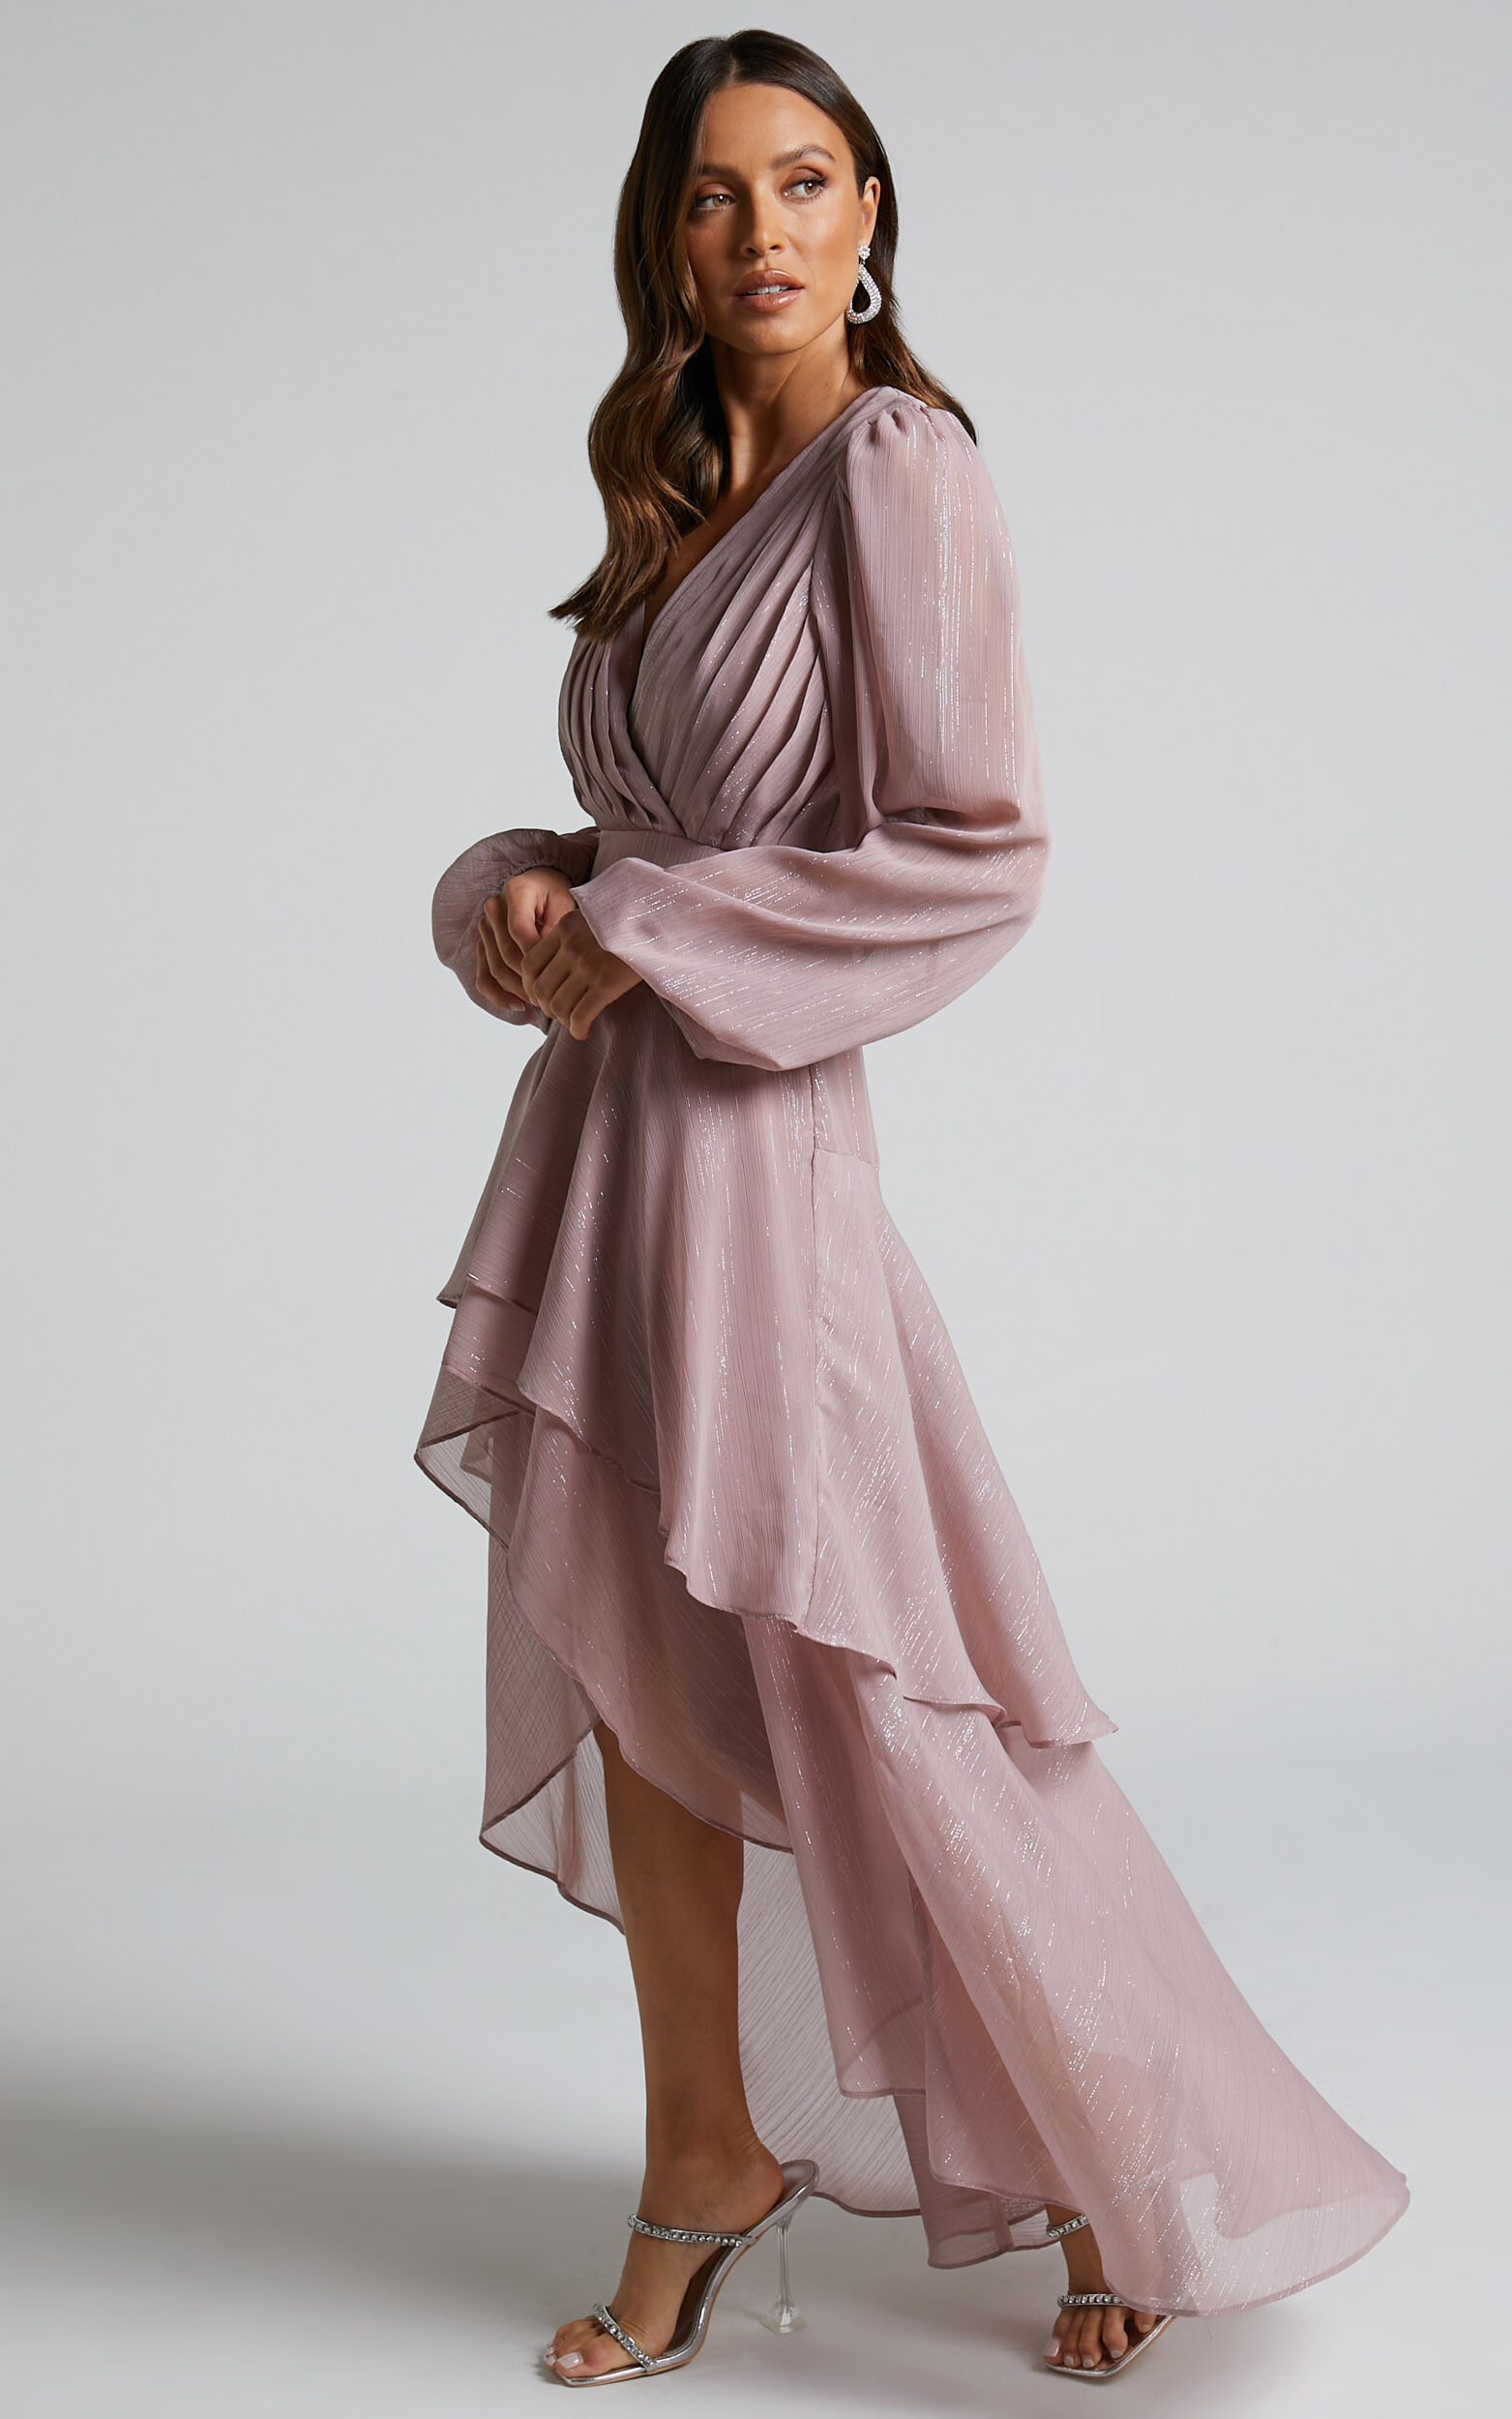 Claudita Midi Dress - Long Sleeve High Low Hem Dress in Dusty Rose